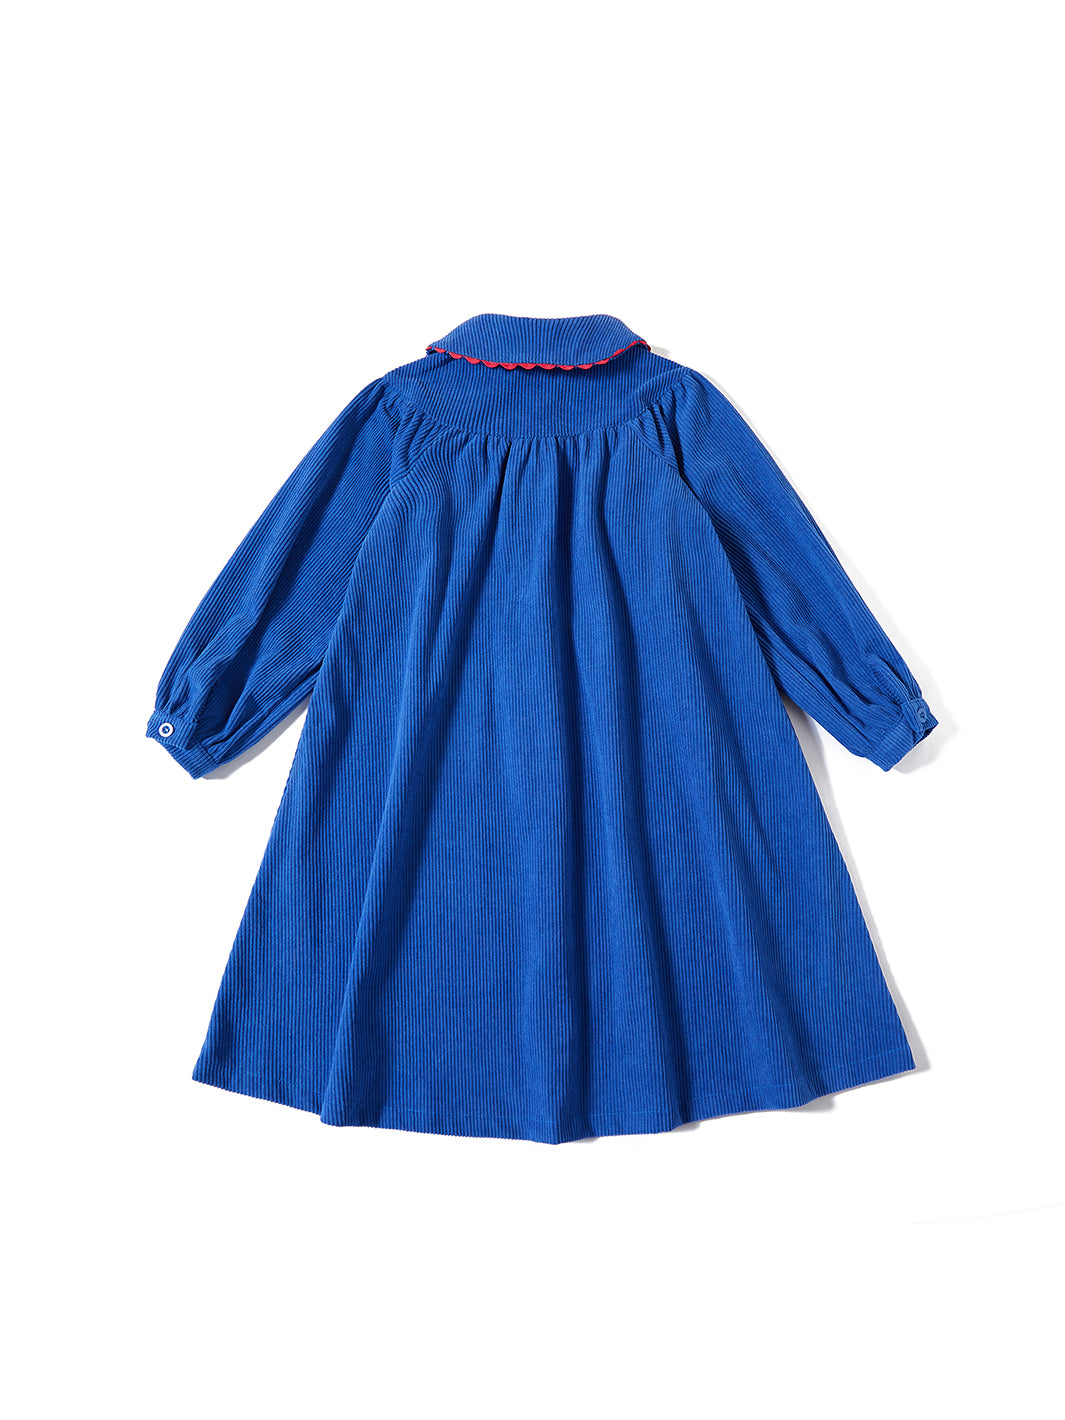 Trim Collar Dress - Royal Blue